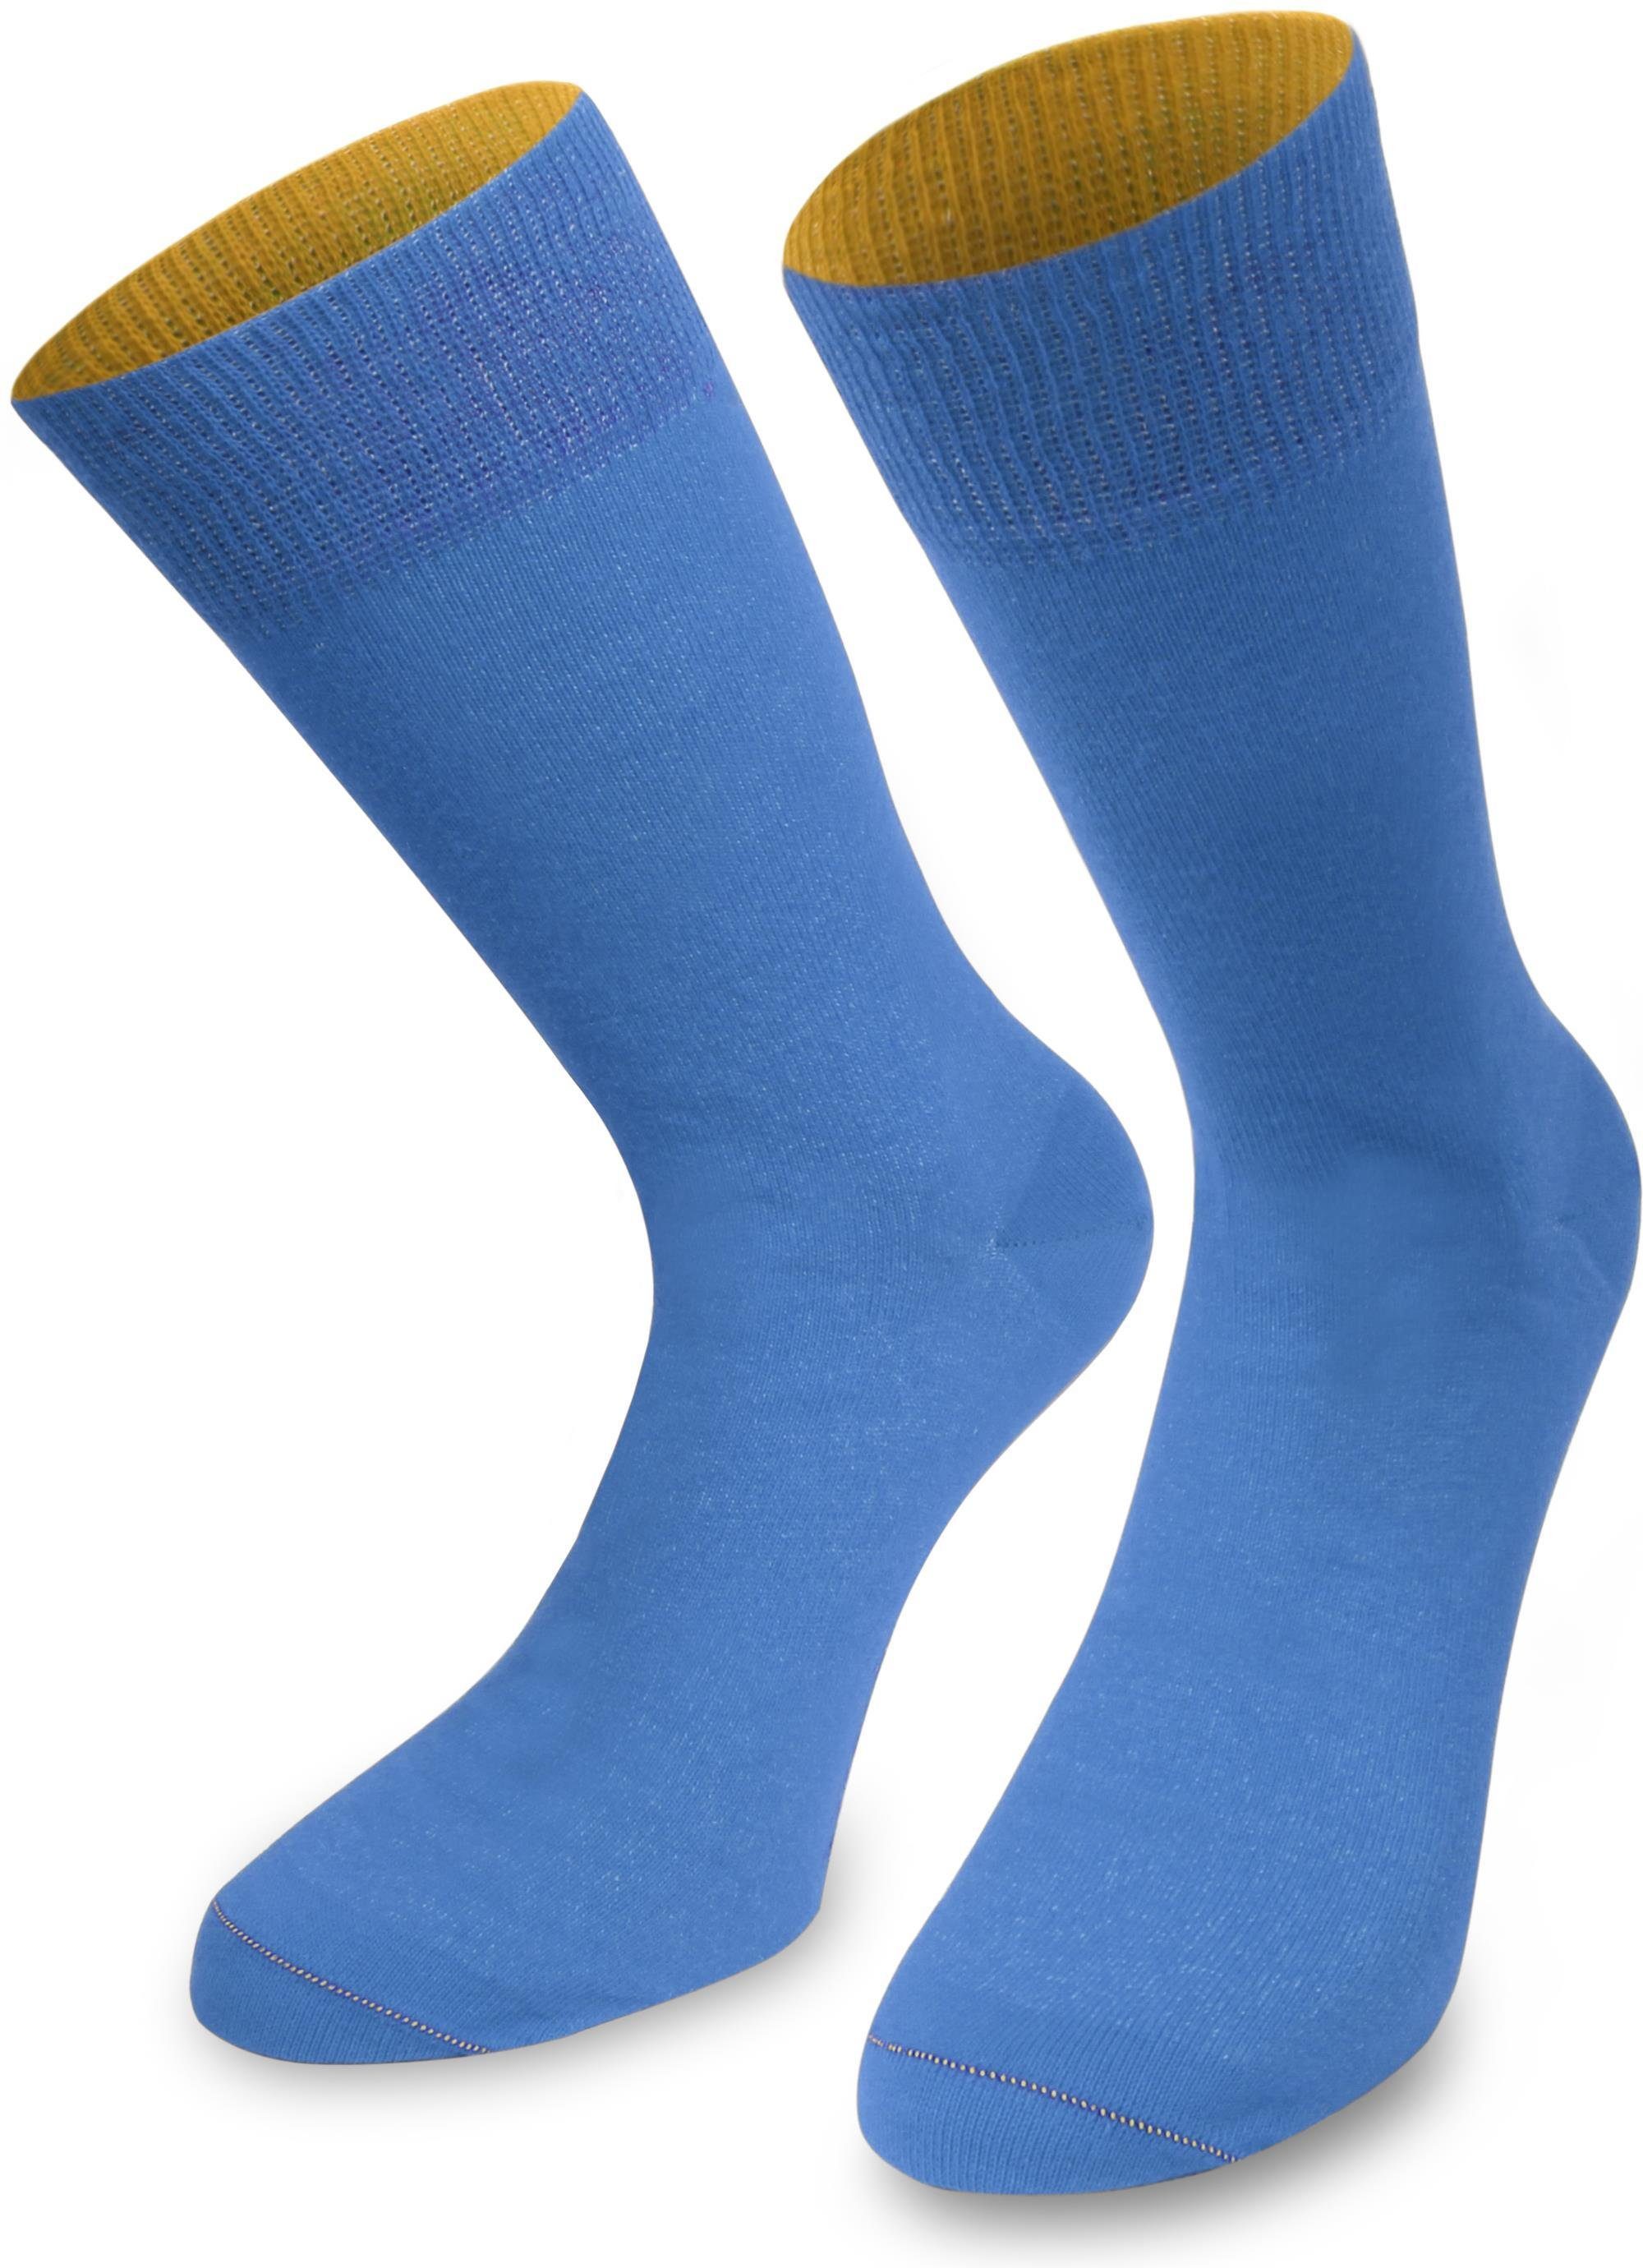 Socken Himmelblau/Aprikose Basicsocken Paar (1 Bund farbig normani Bi-Color Paar) abgesetzter 1